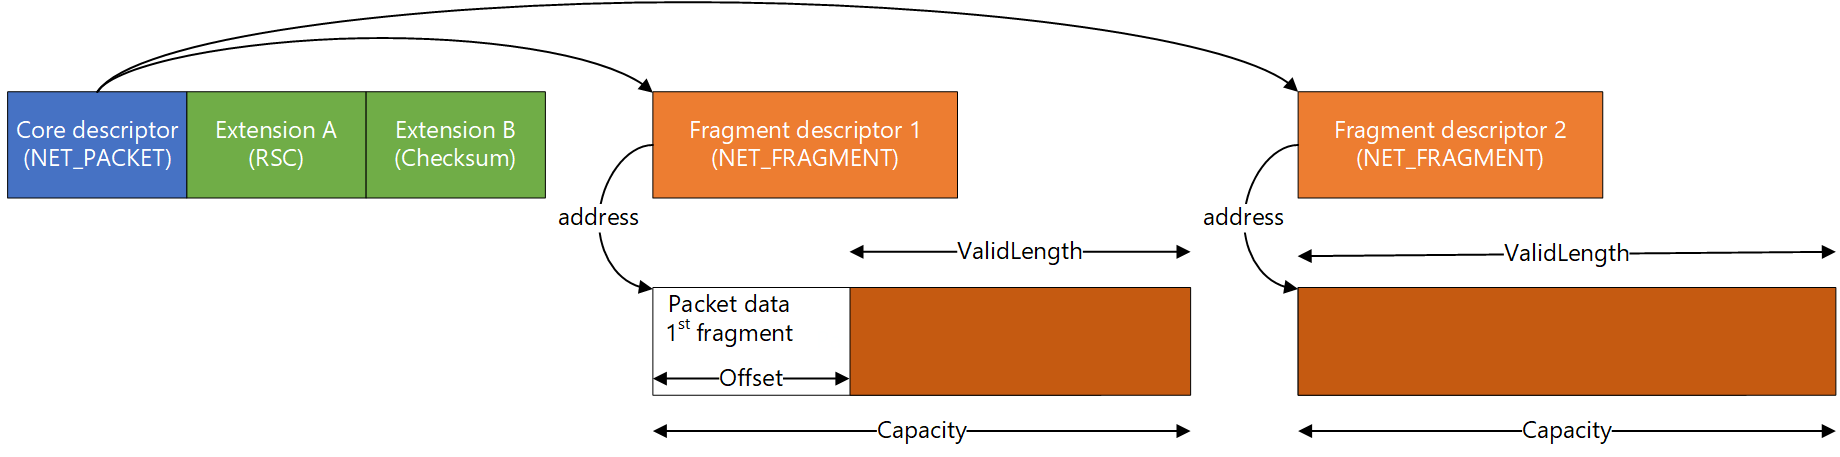 Схема: макет пакета с 2 фрагментами и 2 расширениями.